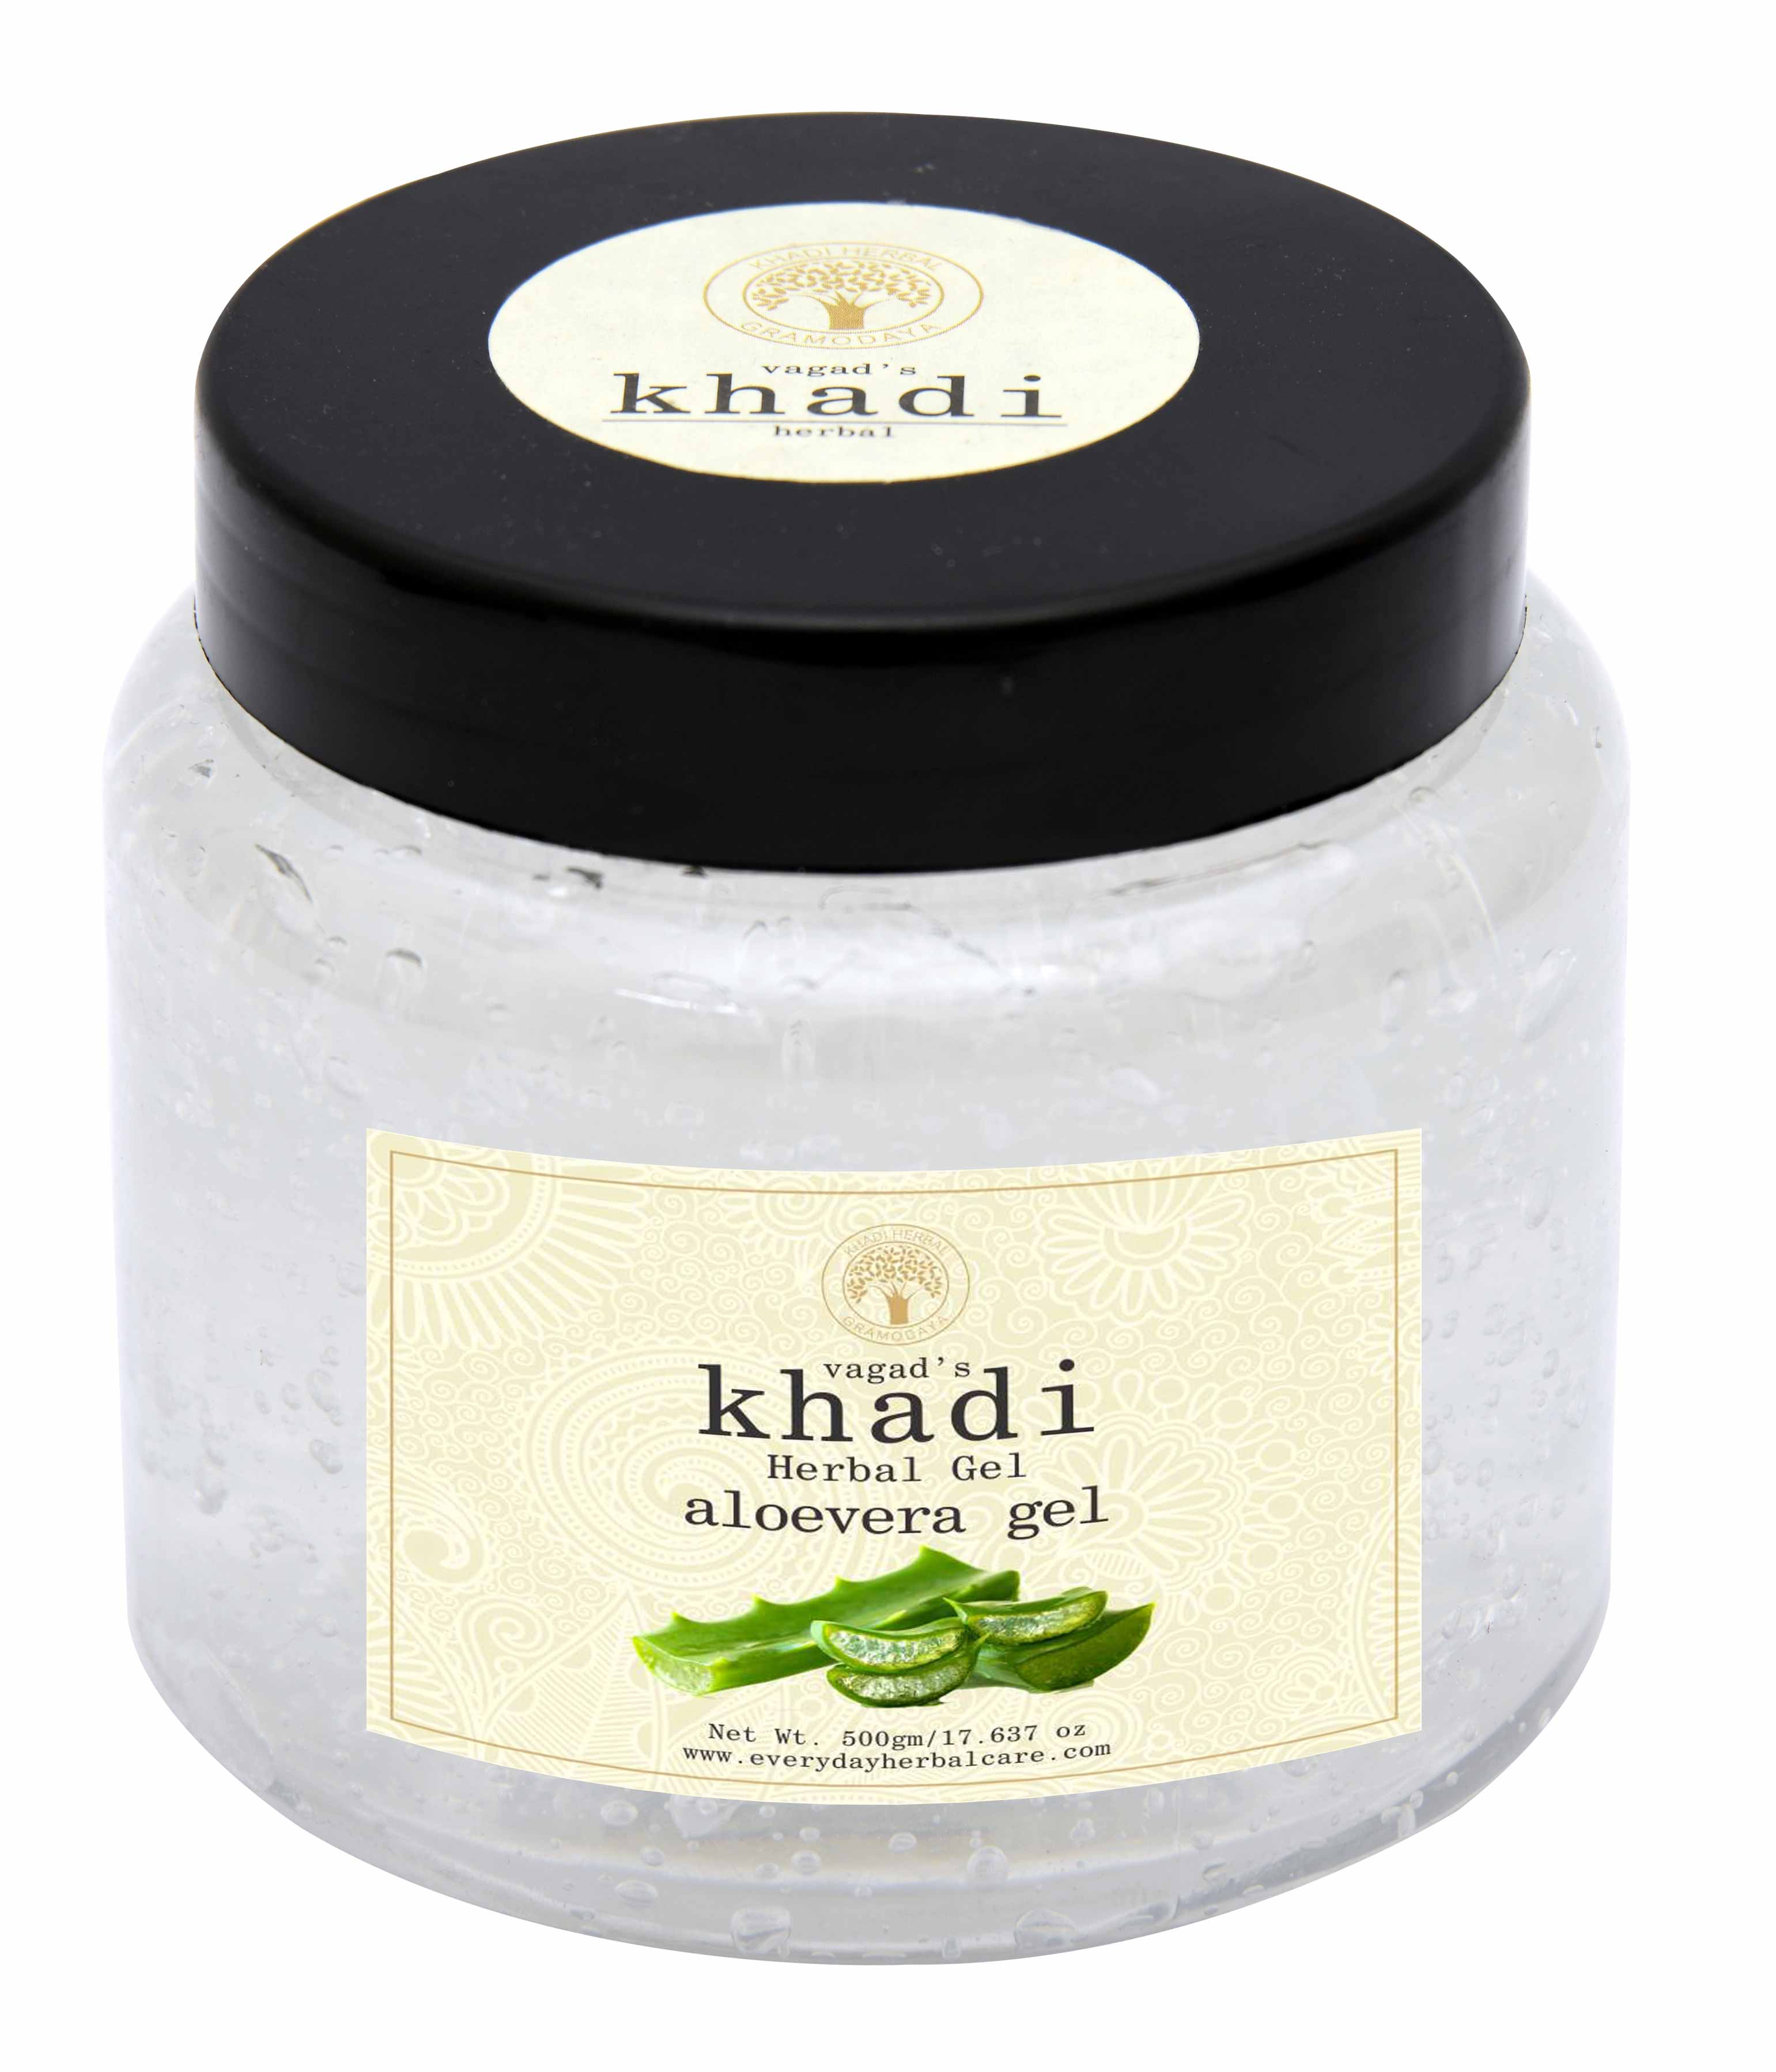 Buy Vagad's Khadi Natural Aloe Vera Gel at Best Price Online